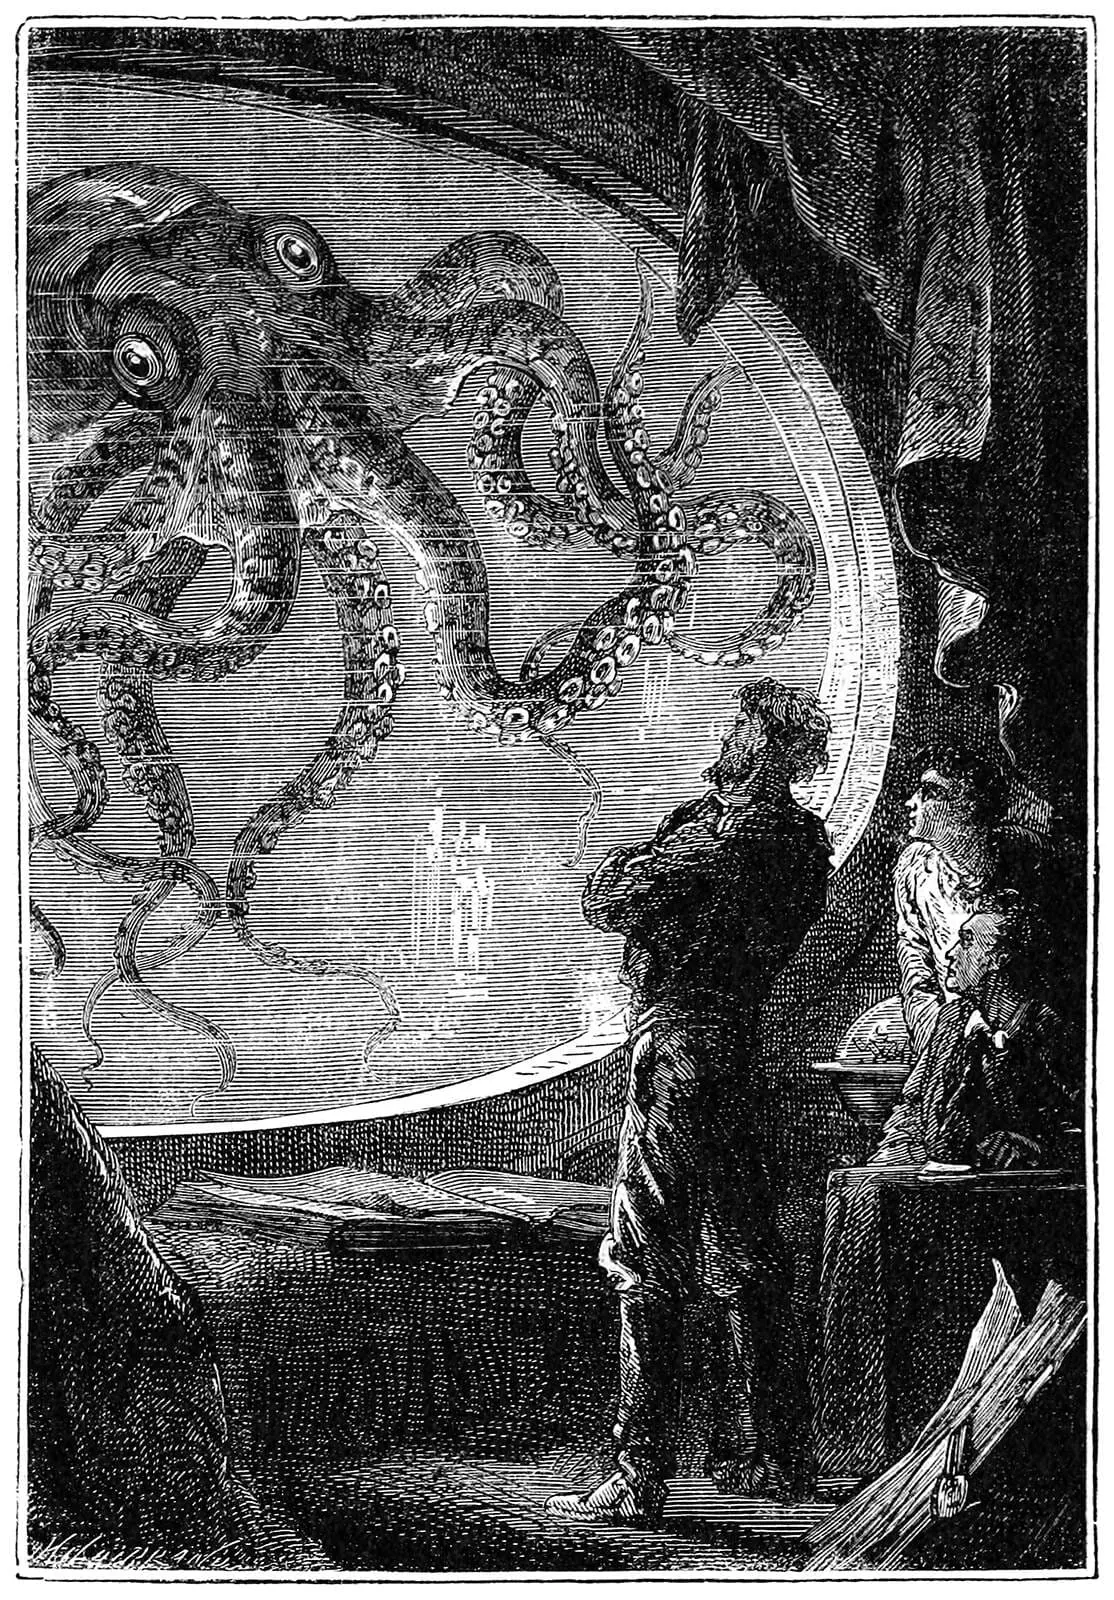 Grabado de 20.000 Leguas de Viaje Submarino, por Alphonse de Neuville